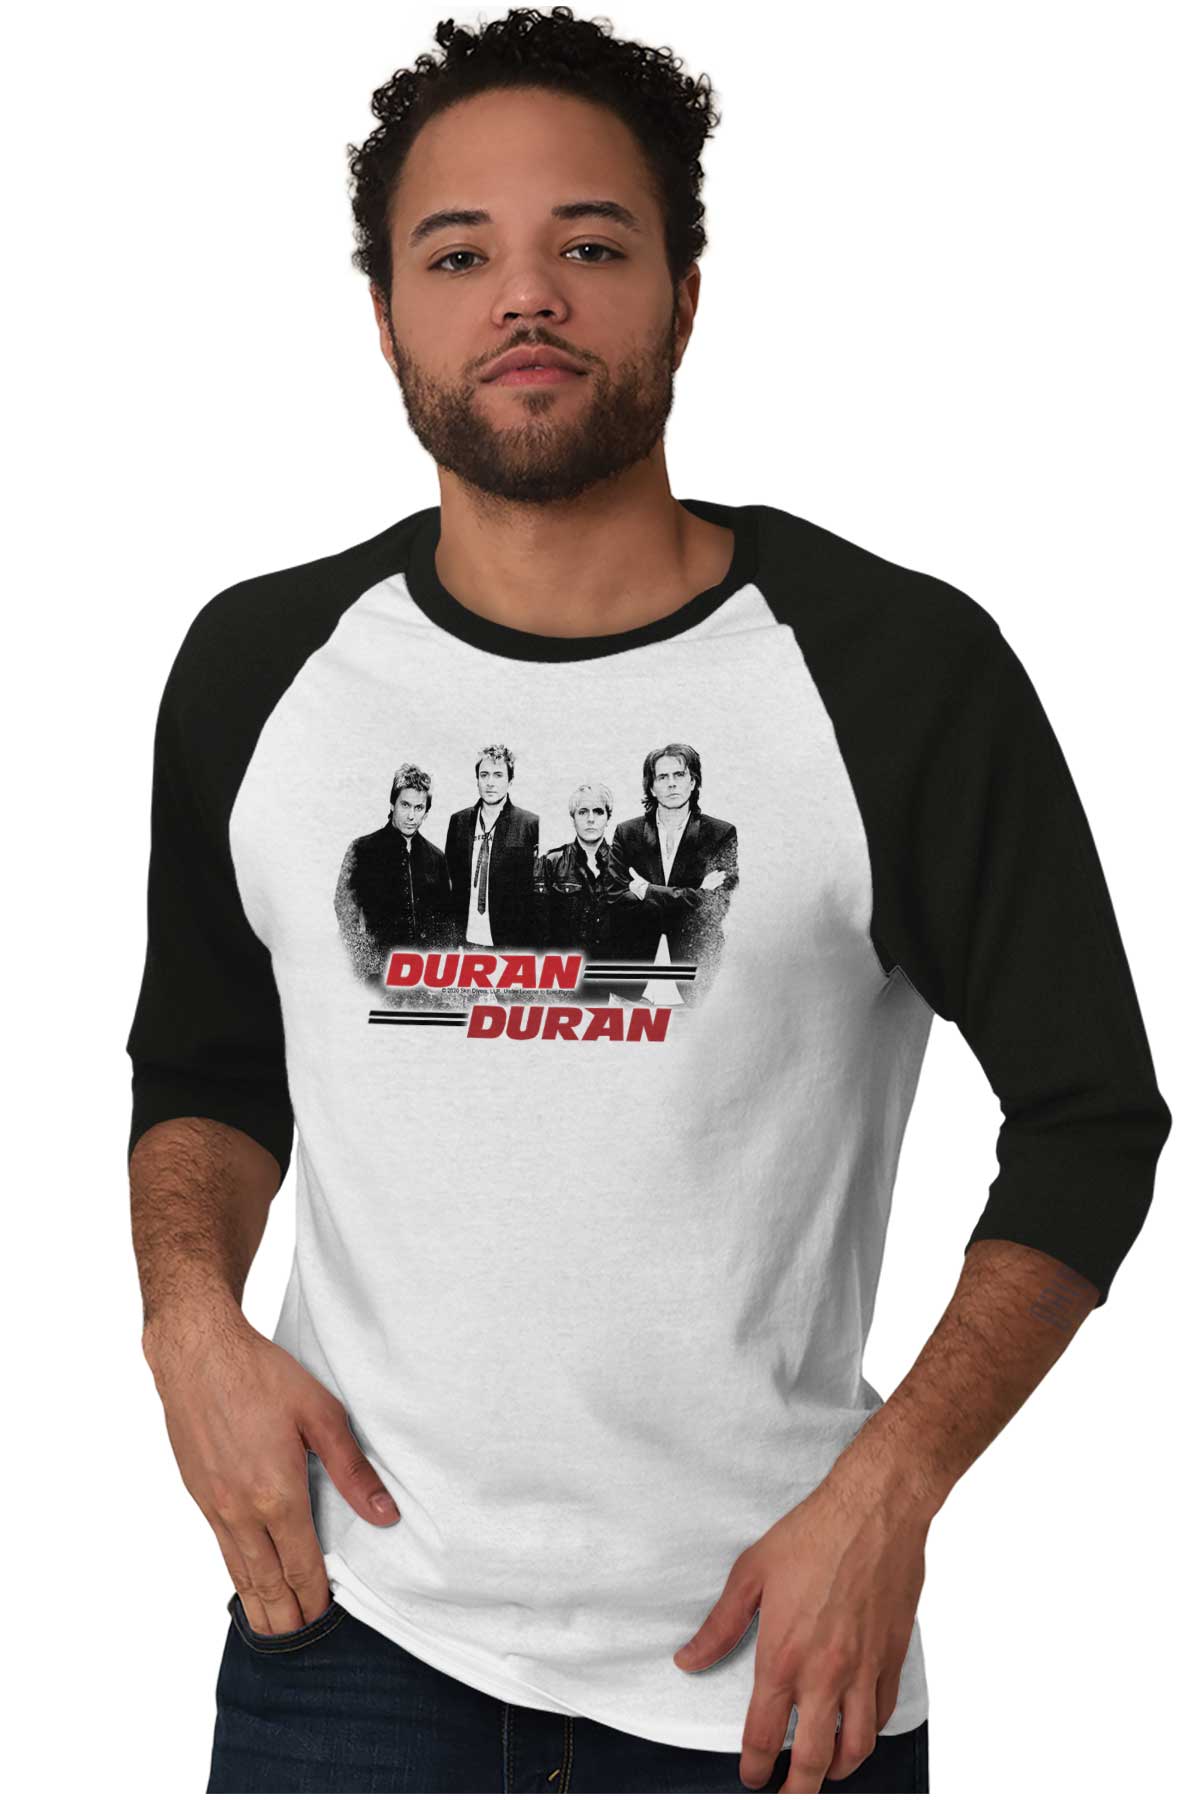 Duran Duran Classic Vintage Photo Tour Merch Adult 3/4 Sleeved Raglan